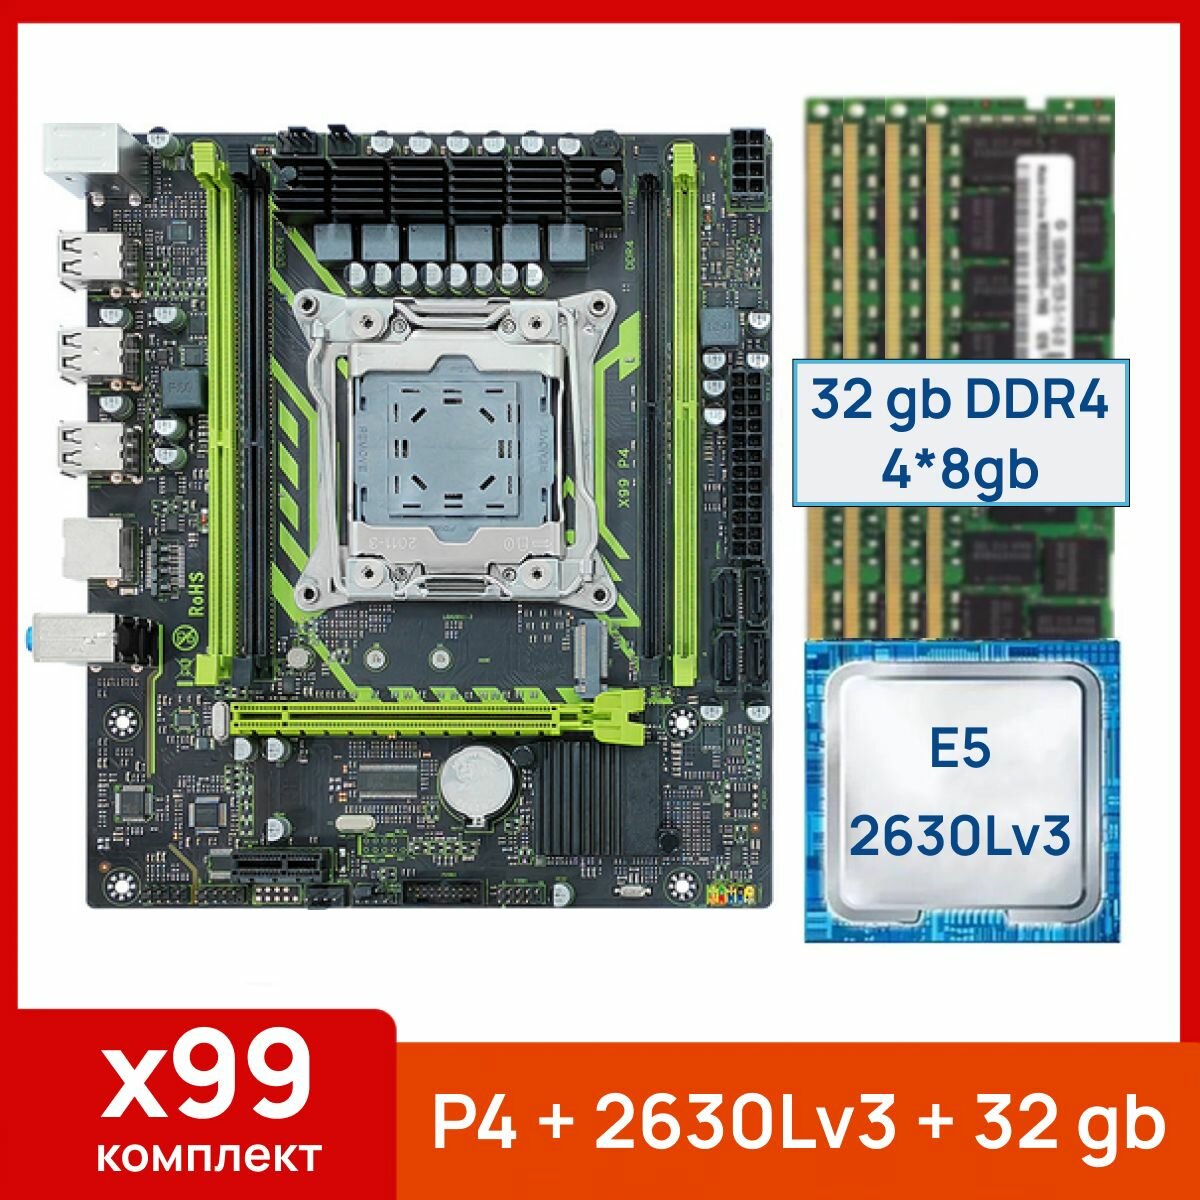 Комплект: MASHINIST X99 P4 + Xeon E5 2630Lv3 + 32 gb(4x8gb) DDR4 ecc reg